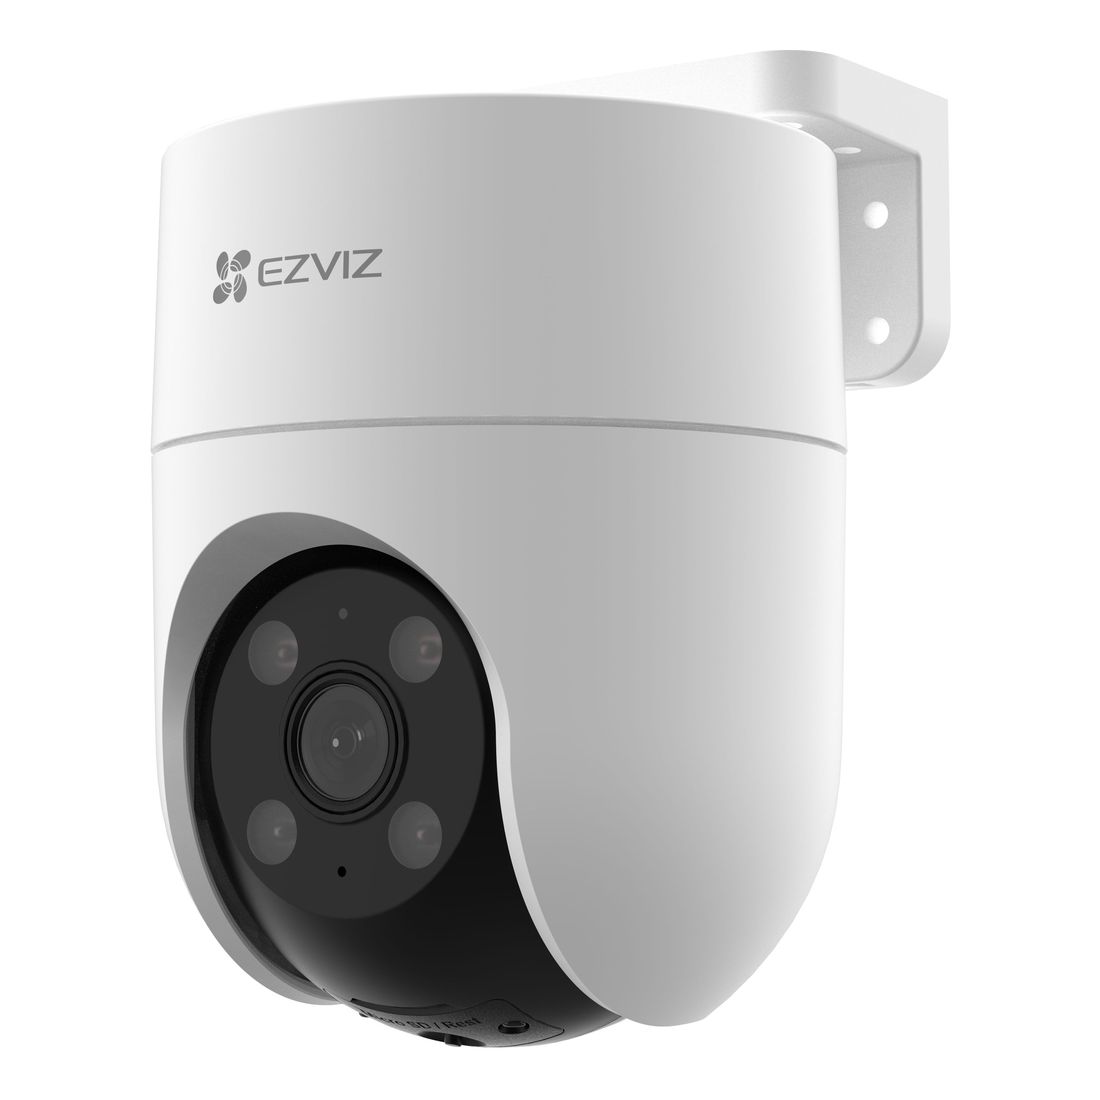 EZVIZ H8c Pan & Tilt Wi-Fi Camera